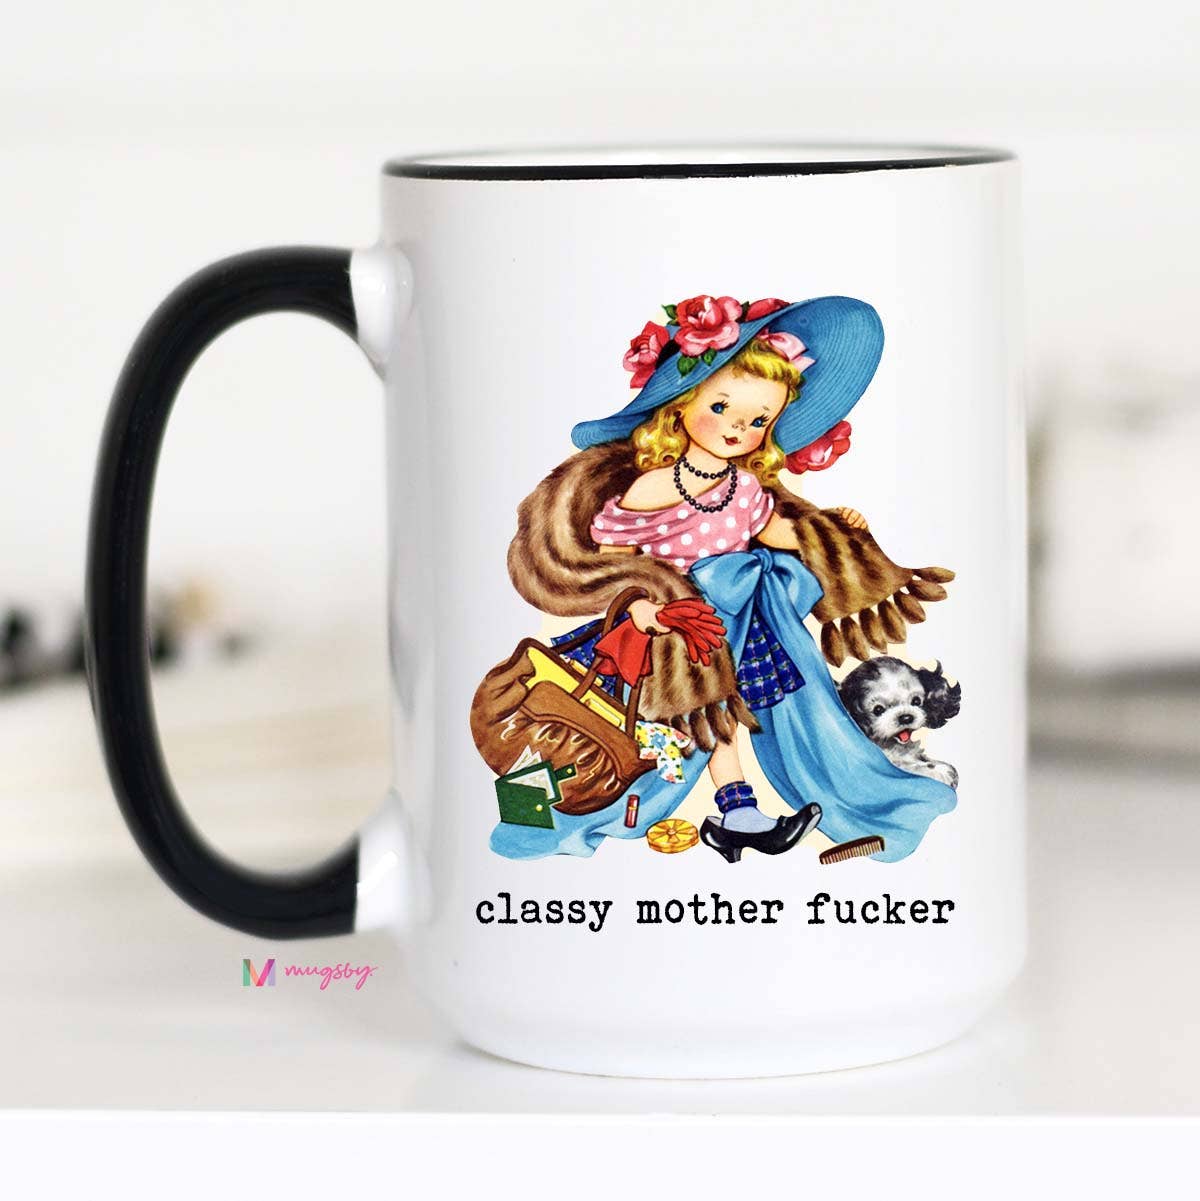 Mugsby - Classy Mother Fucker Funny Coffee Mug